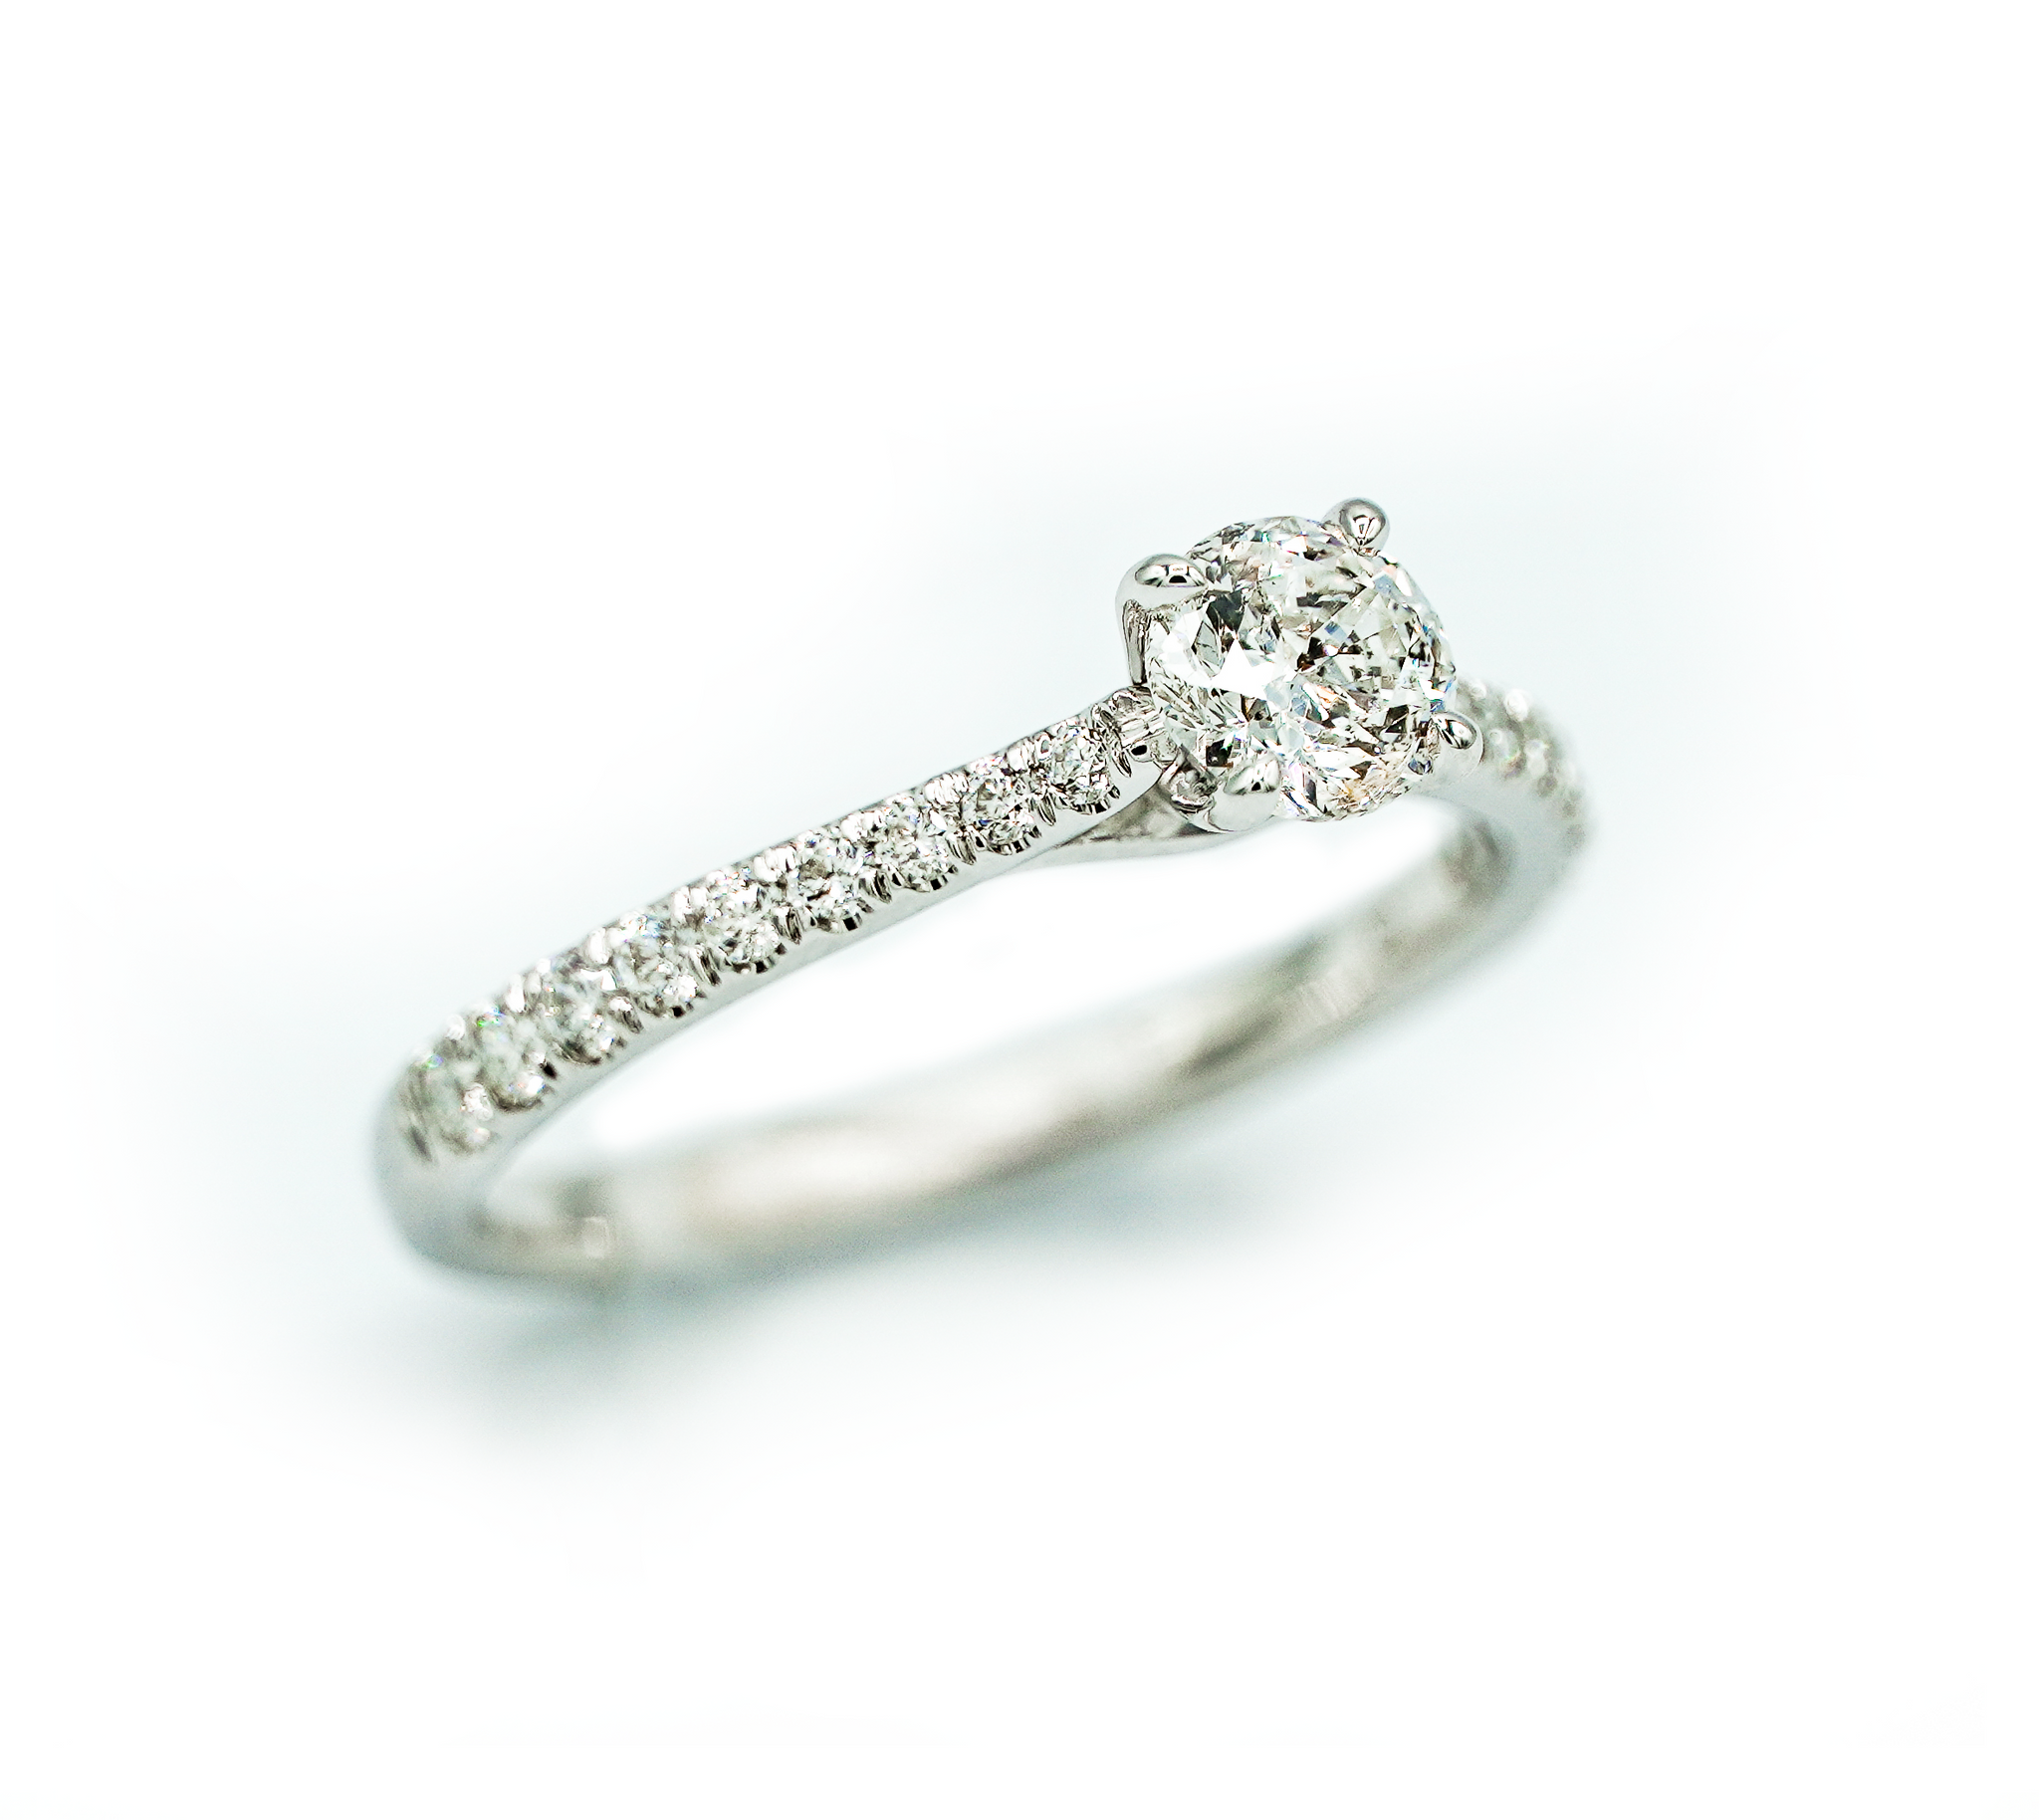 Montalvo Diamonds - Round Modified Brilliant Cut Ring in 14kt White Gold